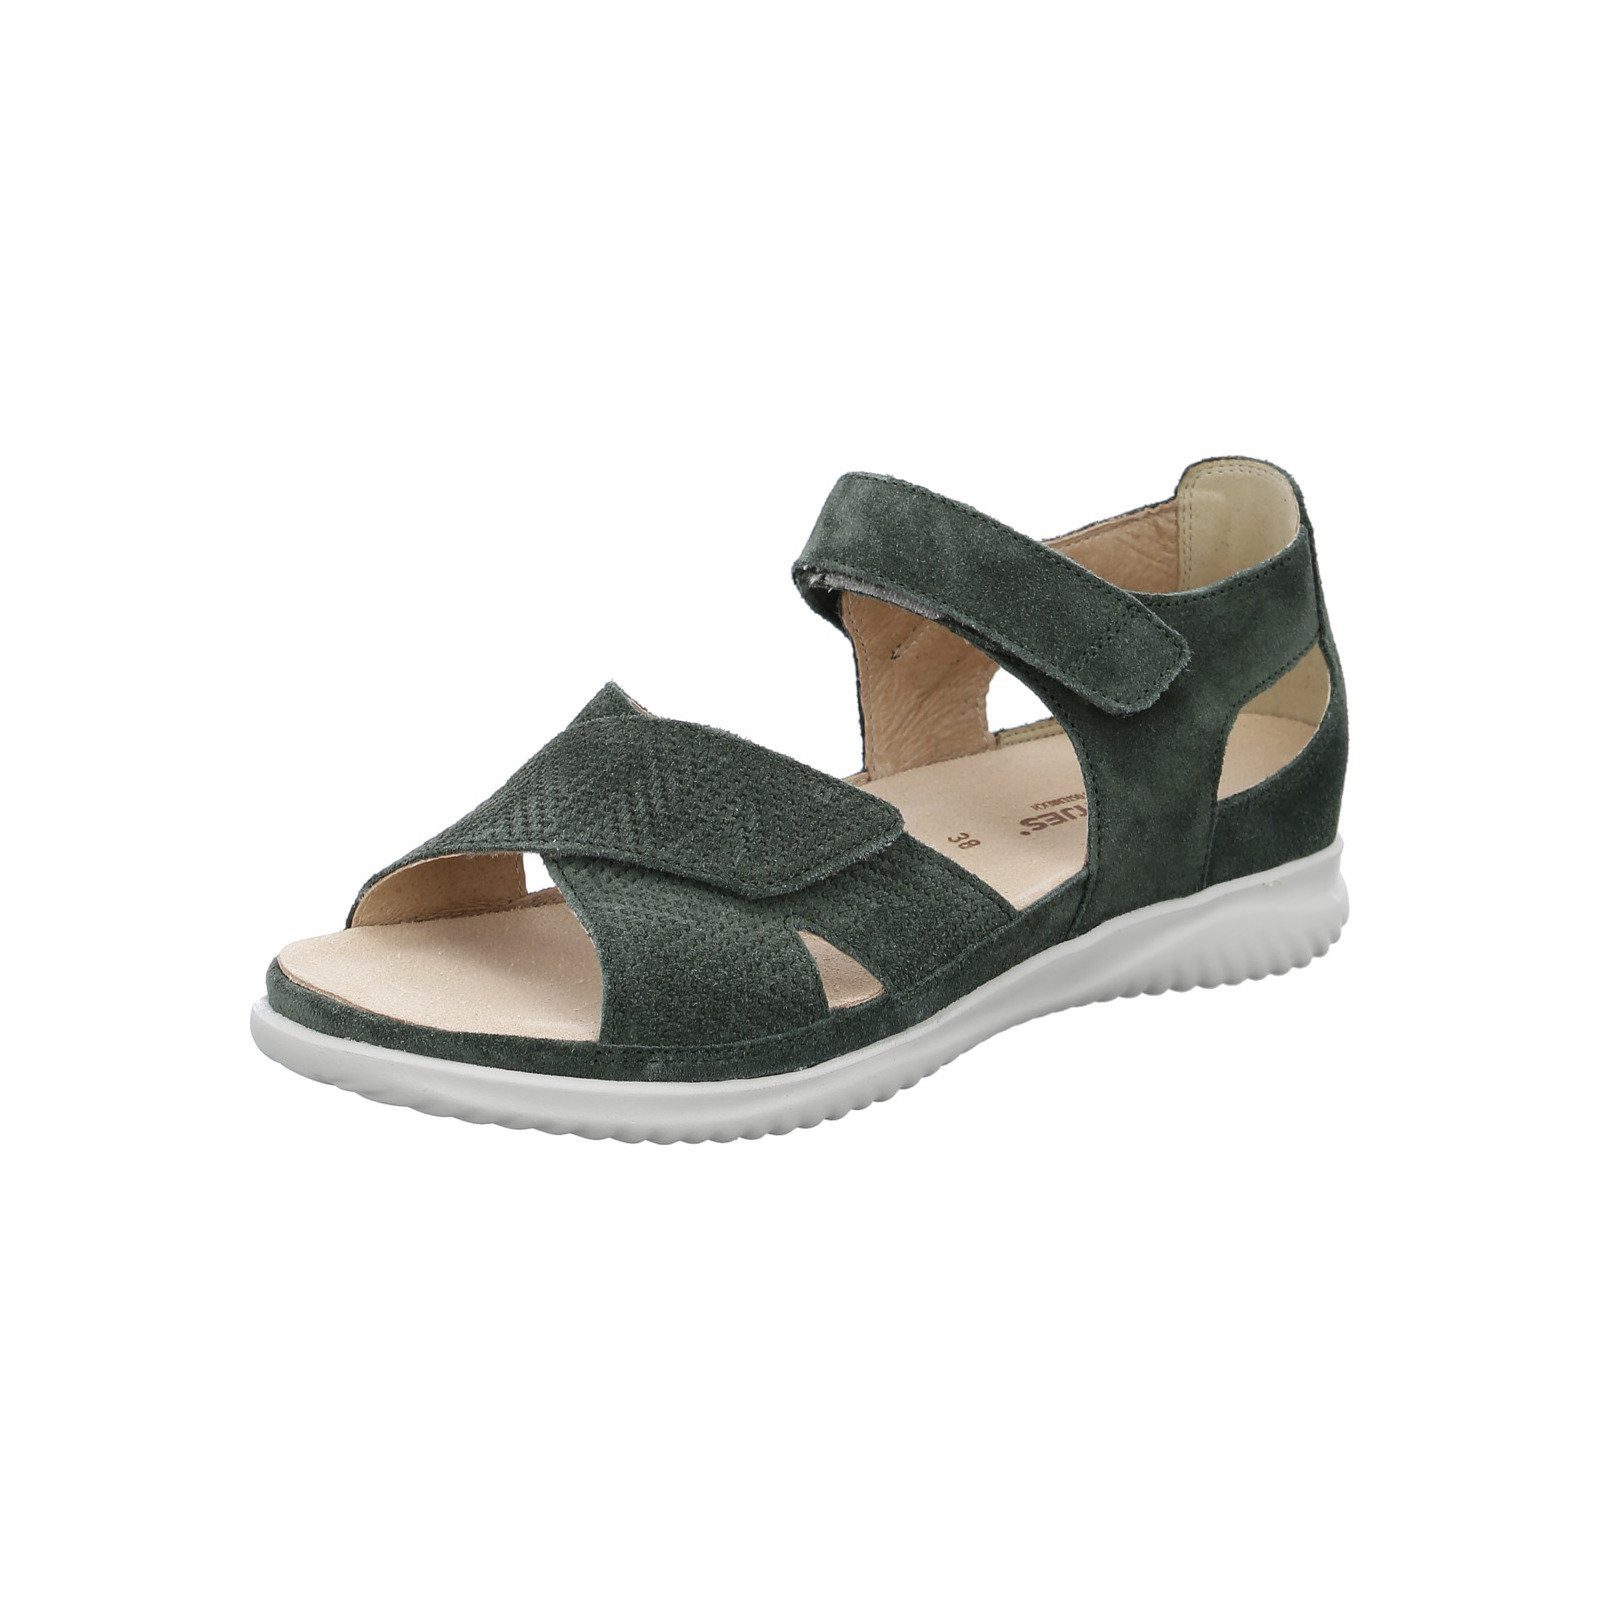 Hartjes Breeze - Damen Schuhe Sandalette grün